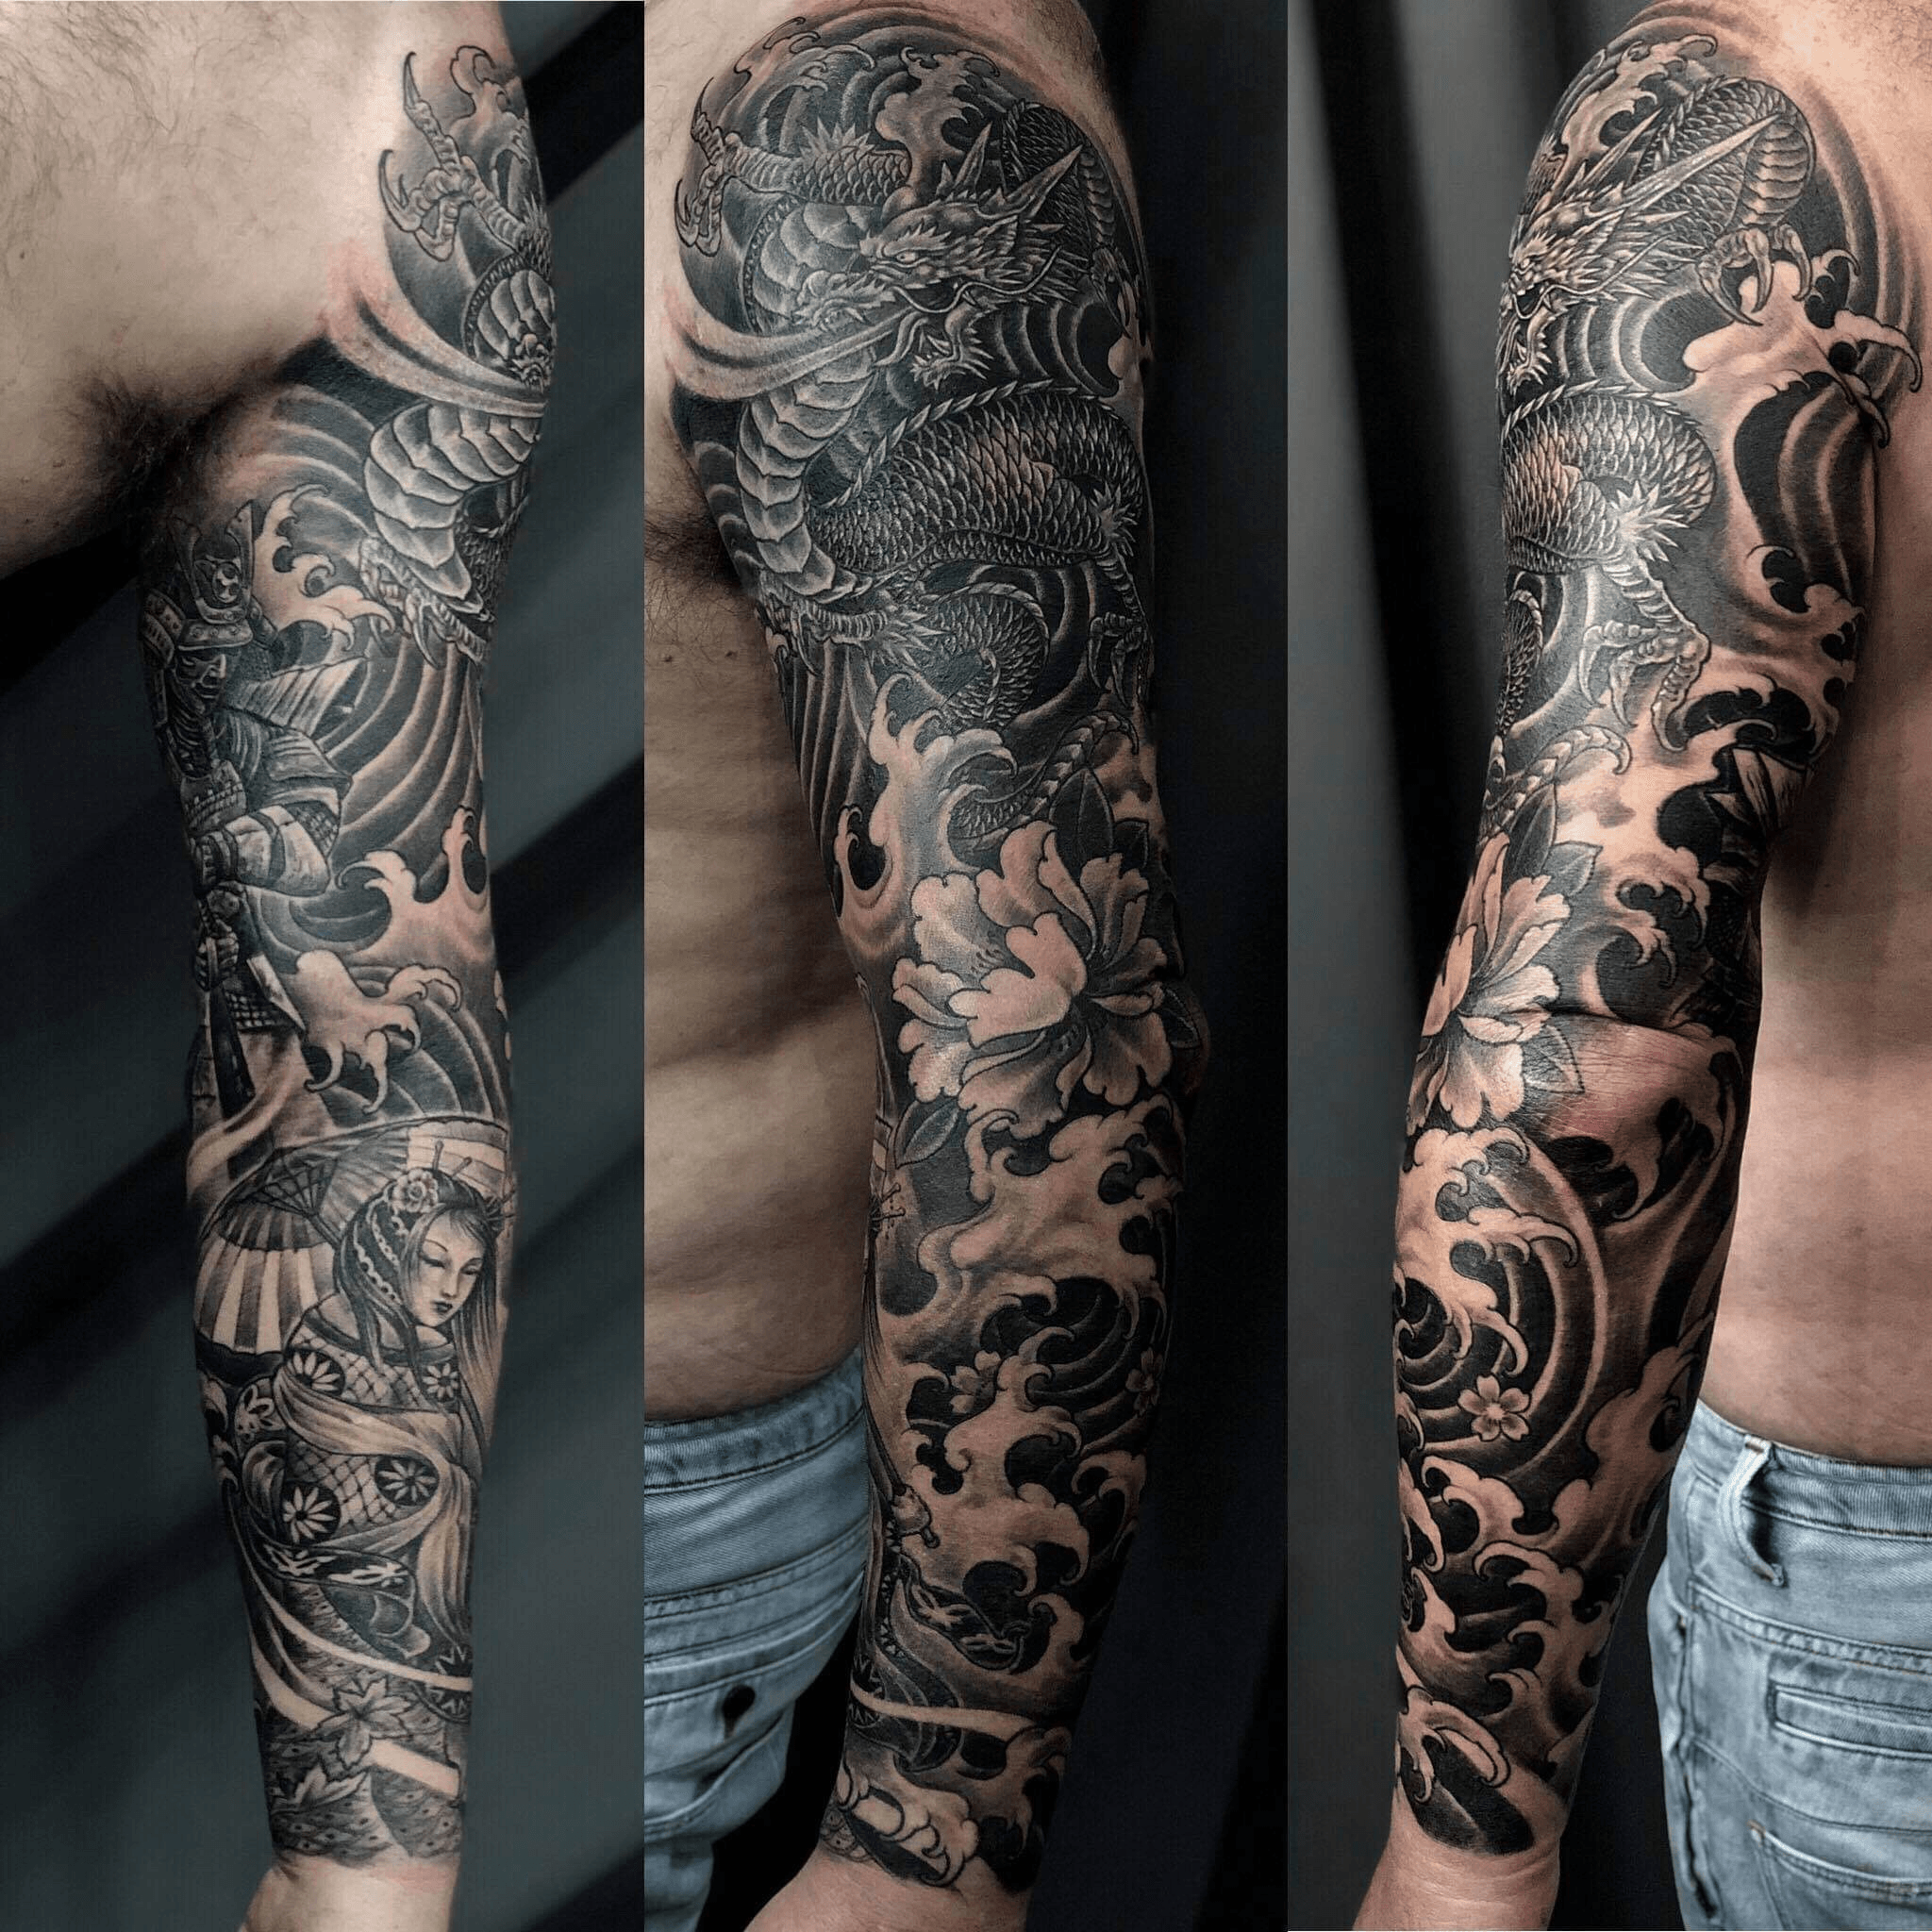 Tattoo uploaded by Angel Ink Phuket • Full sleeve Japanese tattoo